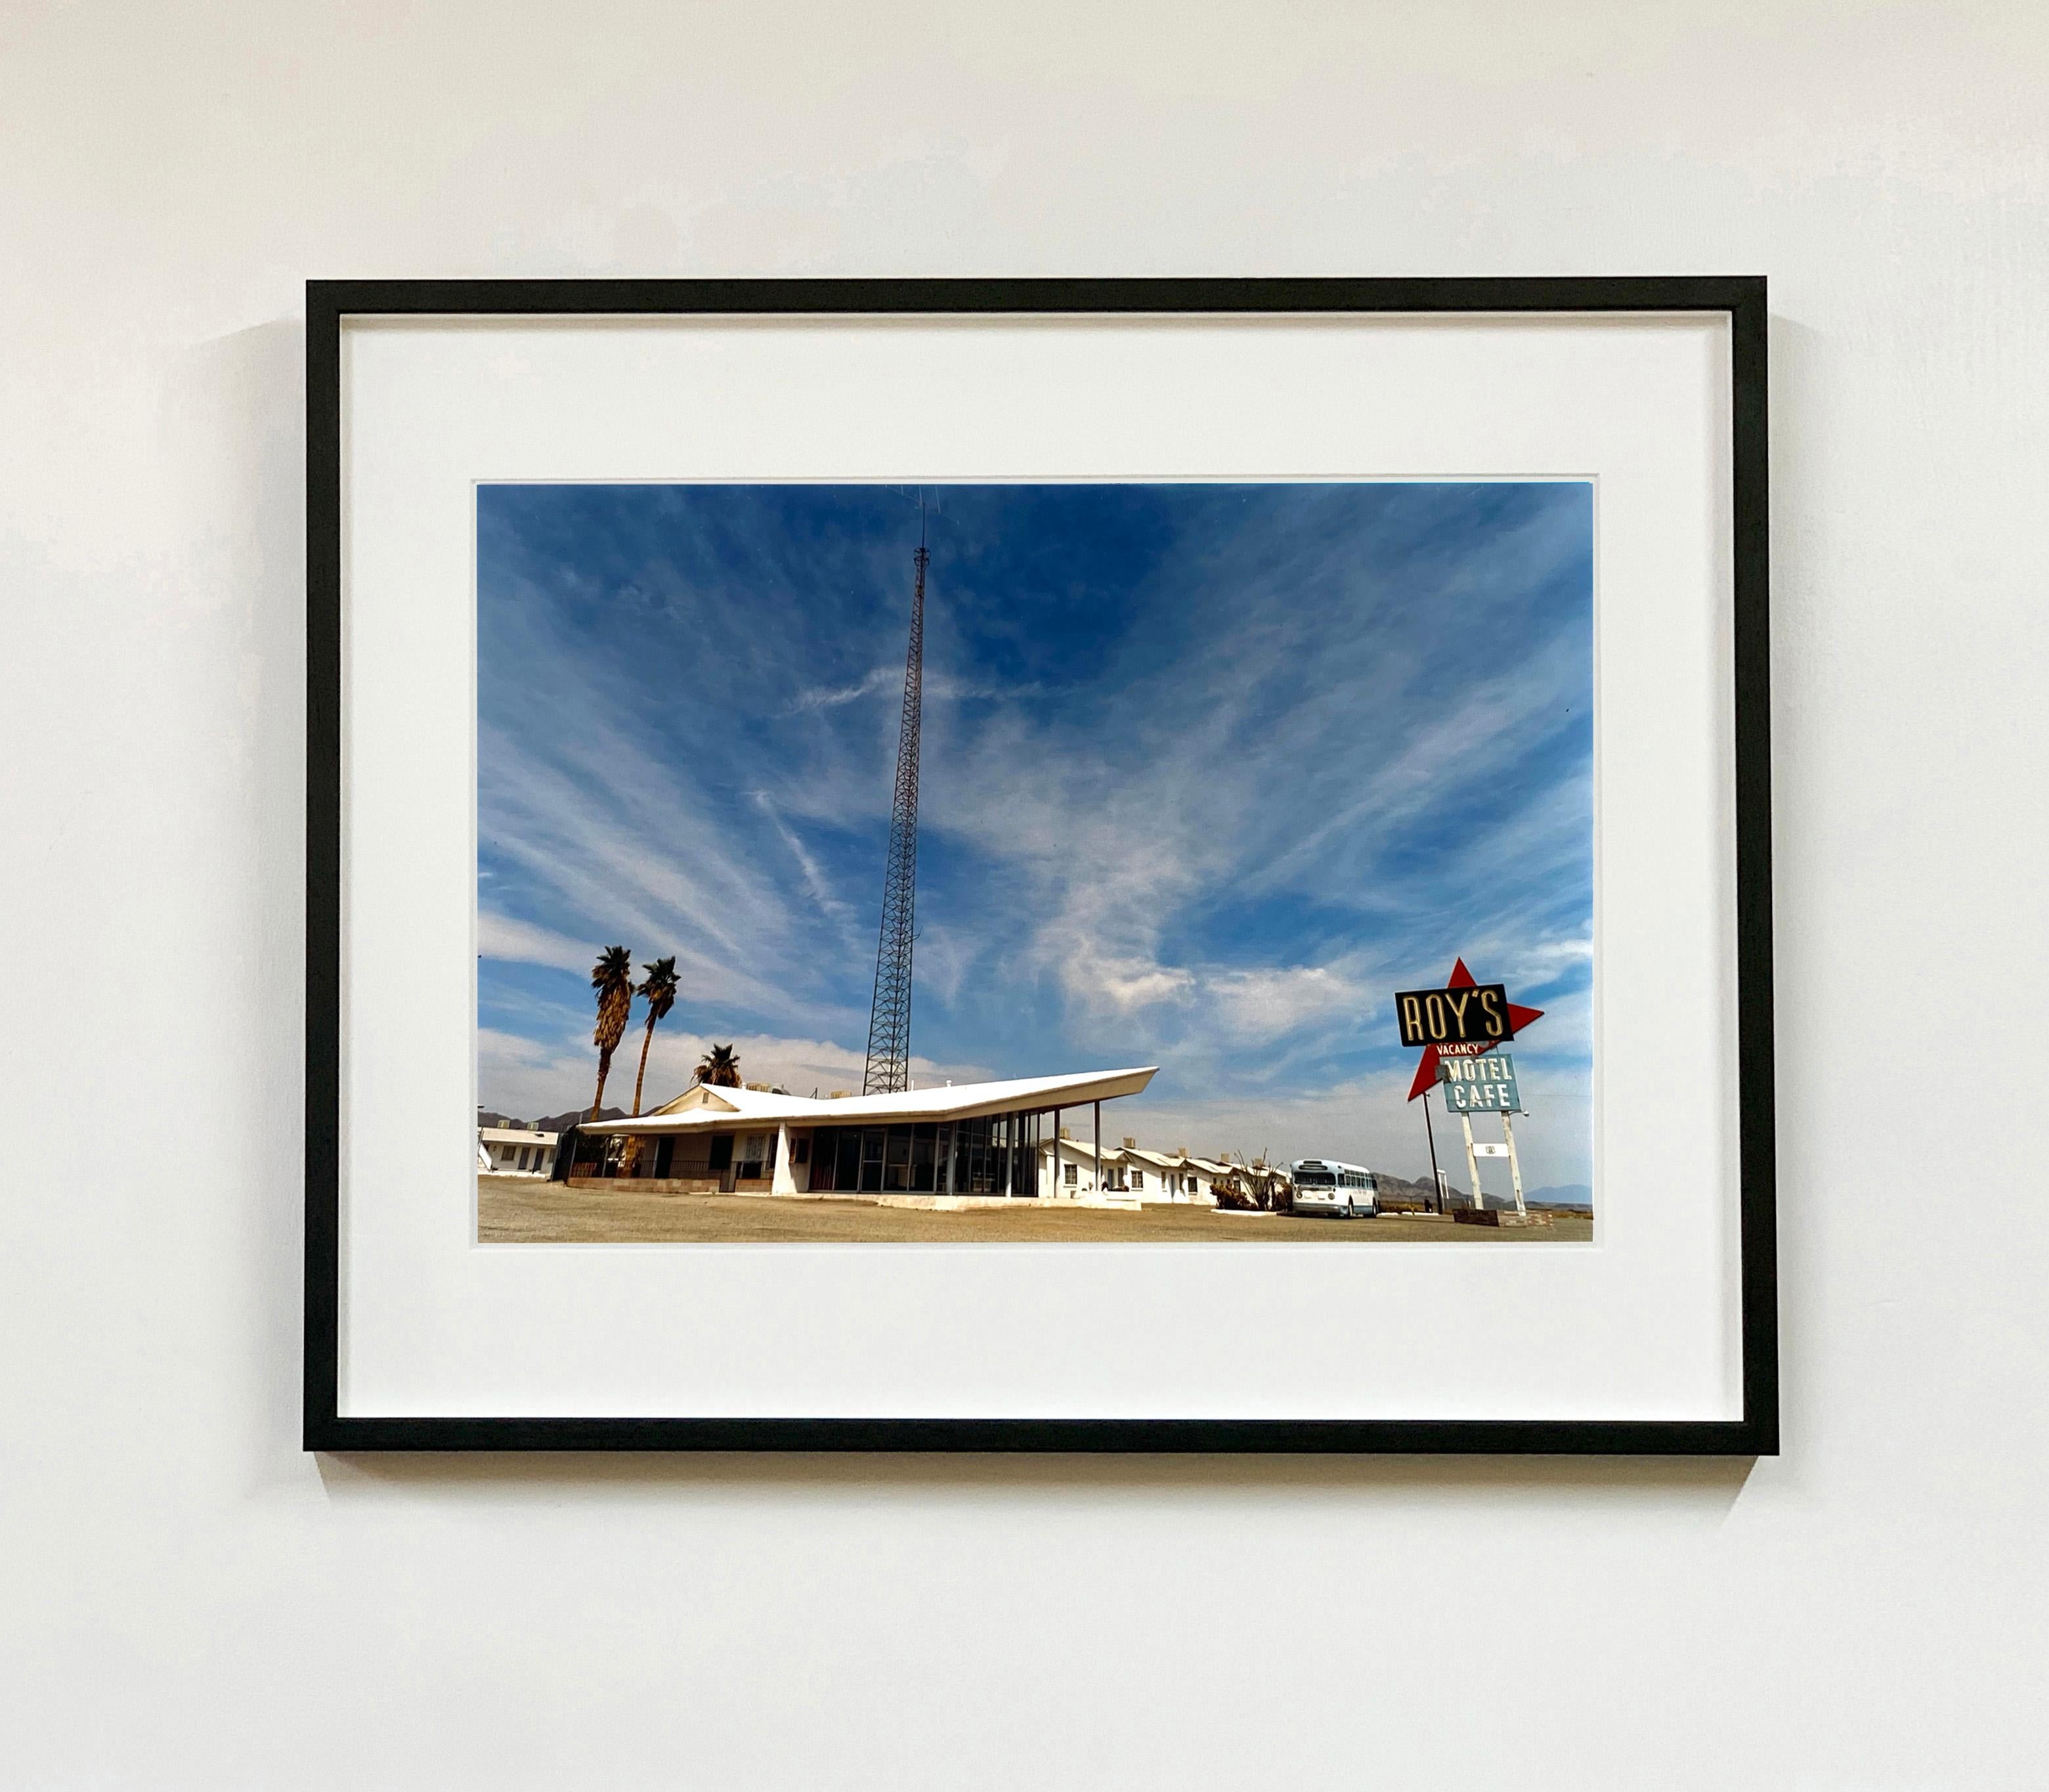 Roy's Motel Route 66, Amboy, California - Landscape Color Photo - Photograph by Richard Heeps